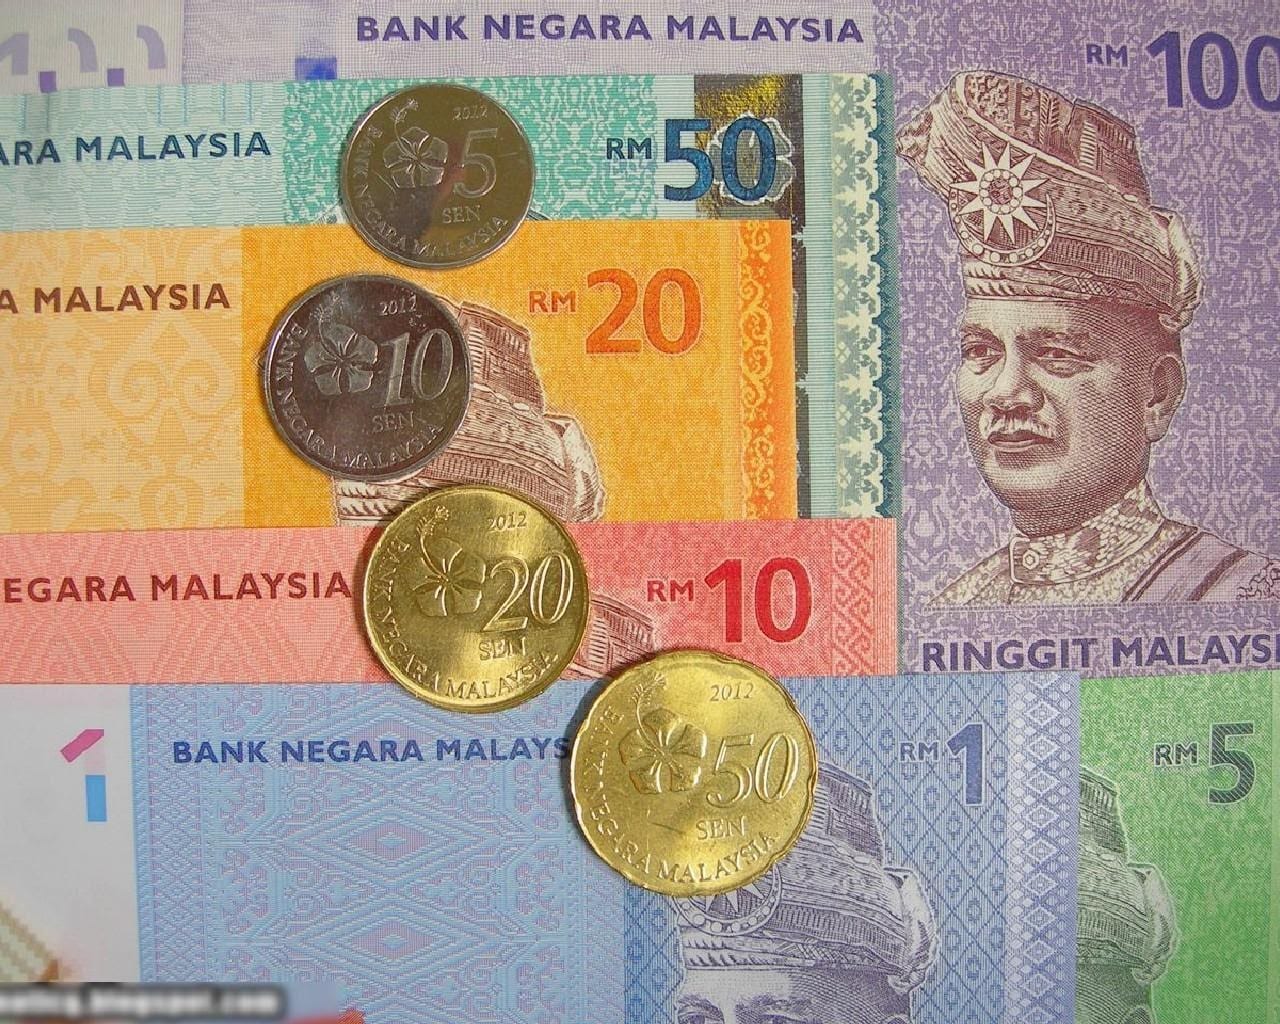 malaysia dùng tiền gì, tiền malaysia, tiền malaysia 1, tiền malaysia 50 sen, tiền xu malaysia, tiền malaysia 50, tiền xu malaysia 20 sen, tiền malaysia 1 đồng, tiền malaysia gọi là gì, malaysia xài tiền gì, đồng tiền malaysia gọi là gì, malaysia sử dụng tiền gì, tiền malaysia 1 ringgit, tiền malaysia đọc là gì, tiền malaysia có những mệnh giá nào, tiền malaysia 1 rm, tiền nước malaysia, tiền xu malaysia 50 sen, tiền malaysia 5 ringgit, tiền malaysia 10 sen, 10 sen malaysia bằng bao nhiêu tiền việt, 20 sen malaysia, 20 sen malaysia bằng bao nhiêu tiền việt nam, 50 sen malaysia bằng bao nhiêu tiền việt nam, 50 sen malaysia, 10 sen malaysia bằng bao nhiêu tiền việt nam, tiền malaysia 5 sen, 10 sen malaysia, hình ảnh tiền malaysia, các mệnh giá tiền malaysia, 20 sen malaysia to vnd, cách nhận biết tiền malaysia, sen malaysia, đồng tiền malaysia, dong tien malaysia, đồng xu malaysia